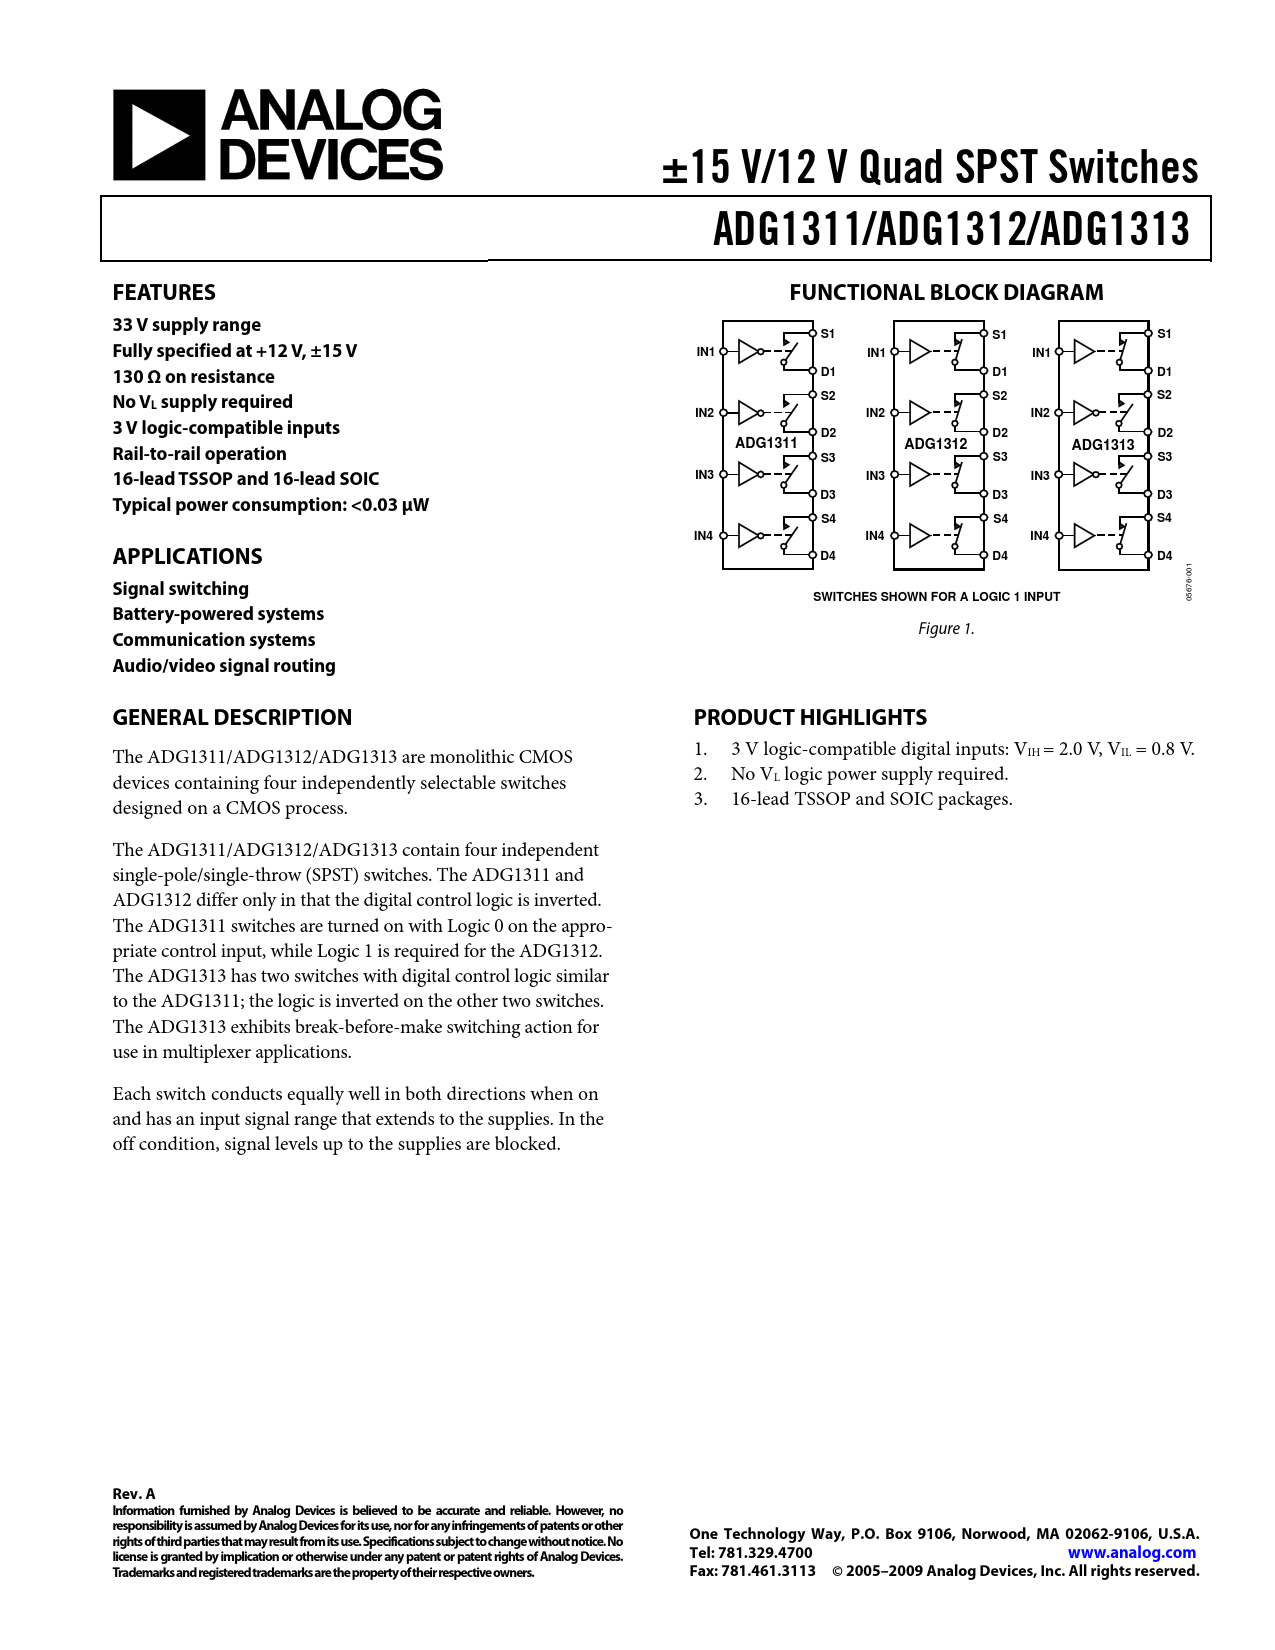 Datasheet ADG1311, ADG1312, ADG1313 Analog Devices, Revision: A